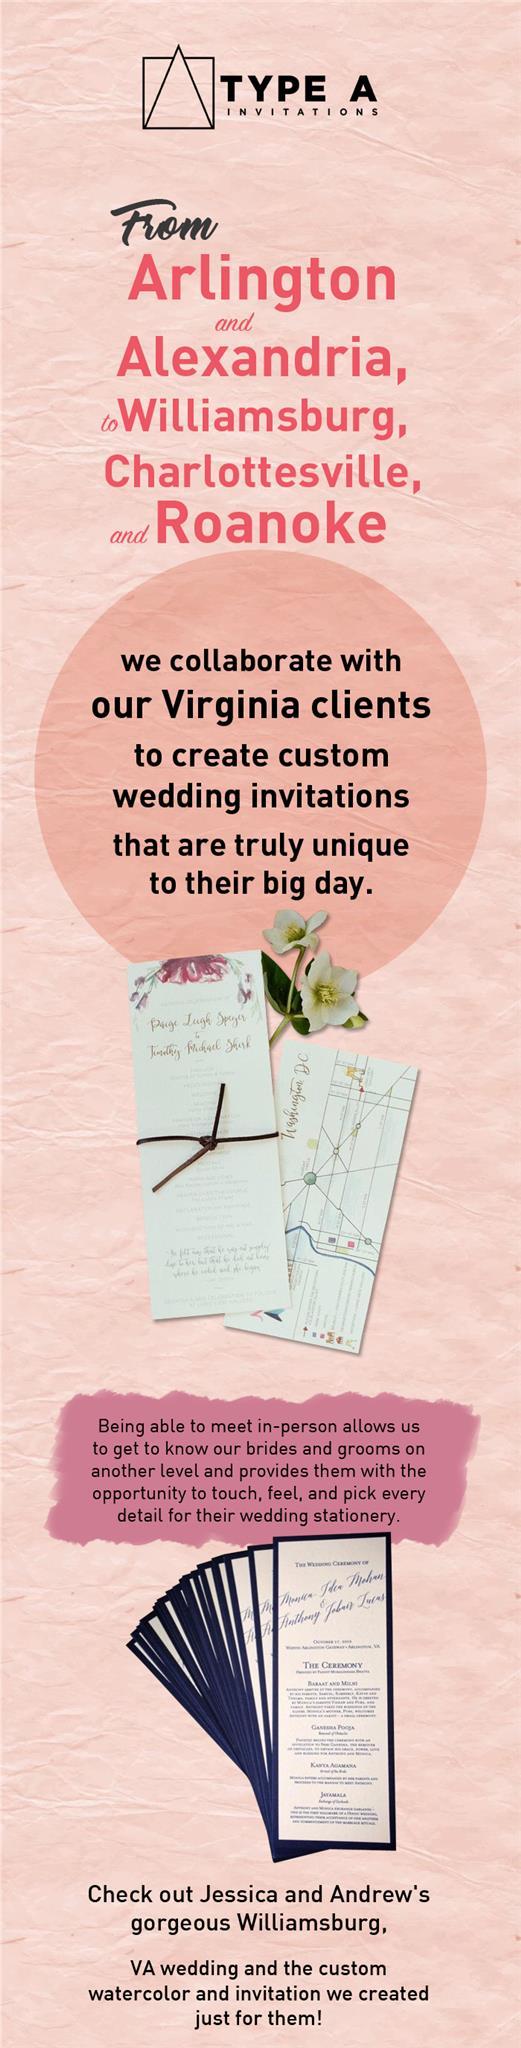 Choose from Type A Invitations, LLC.’s Stylish Wedding Stationery